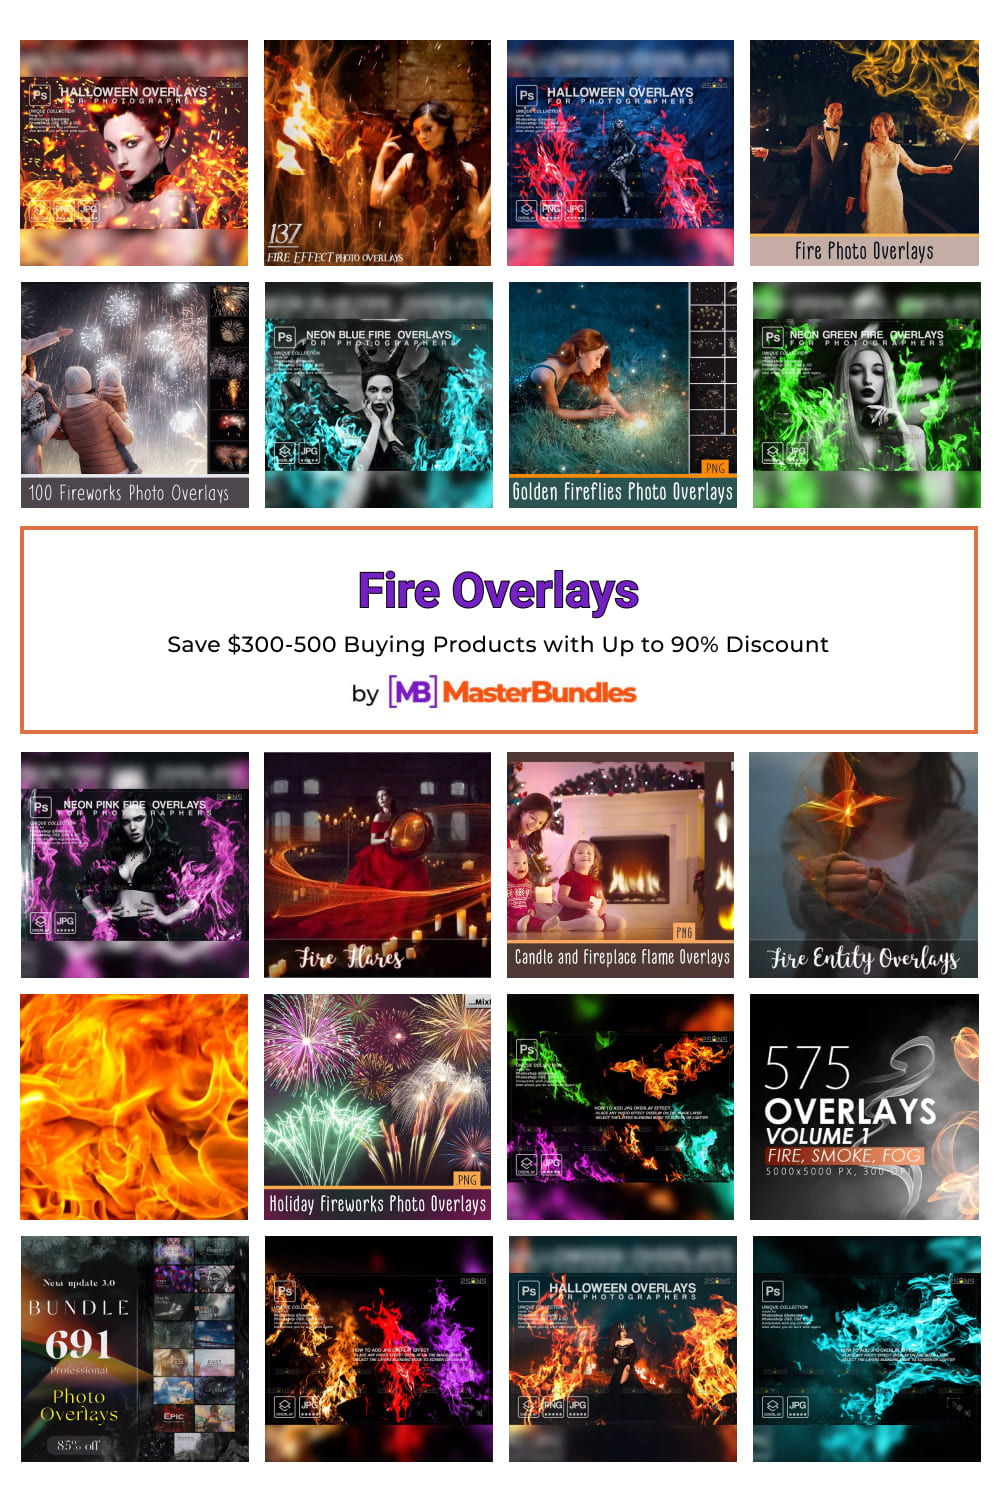 Fire Overlays Pinterest image.